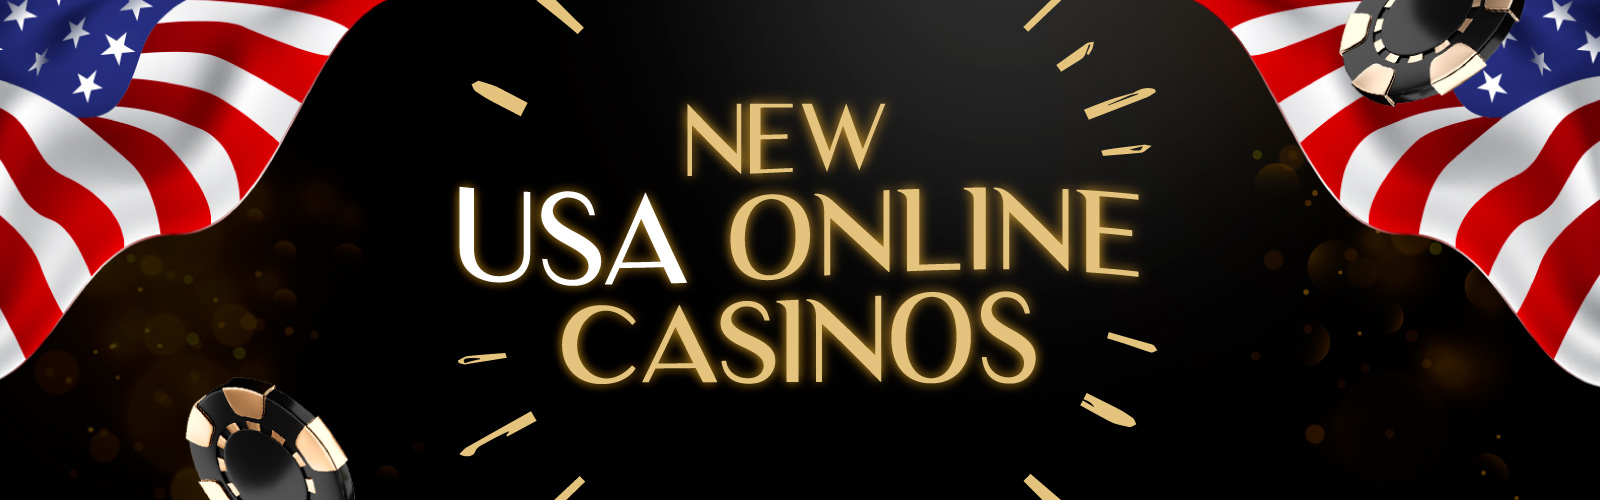 Improve Your online casinos Skills